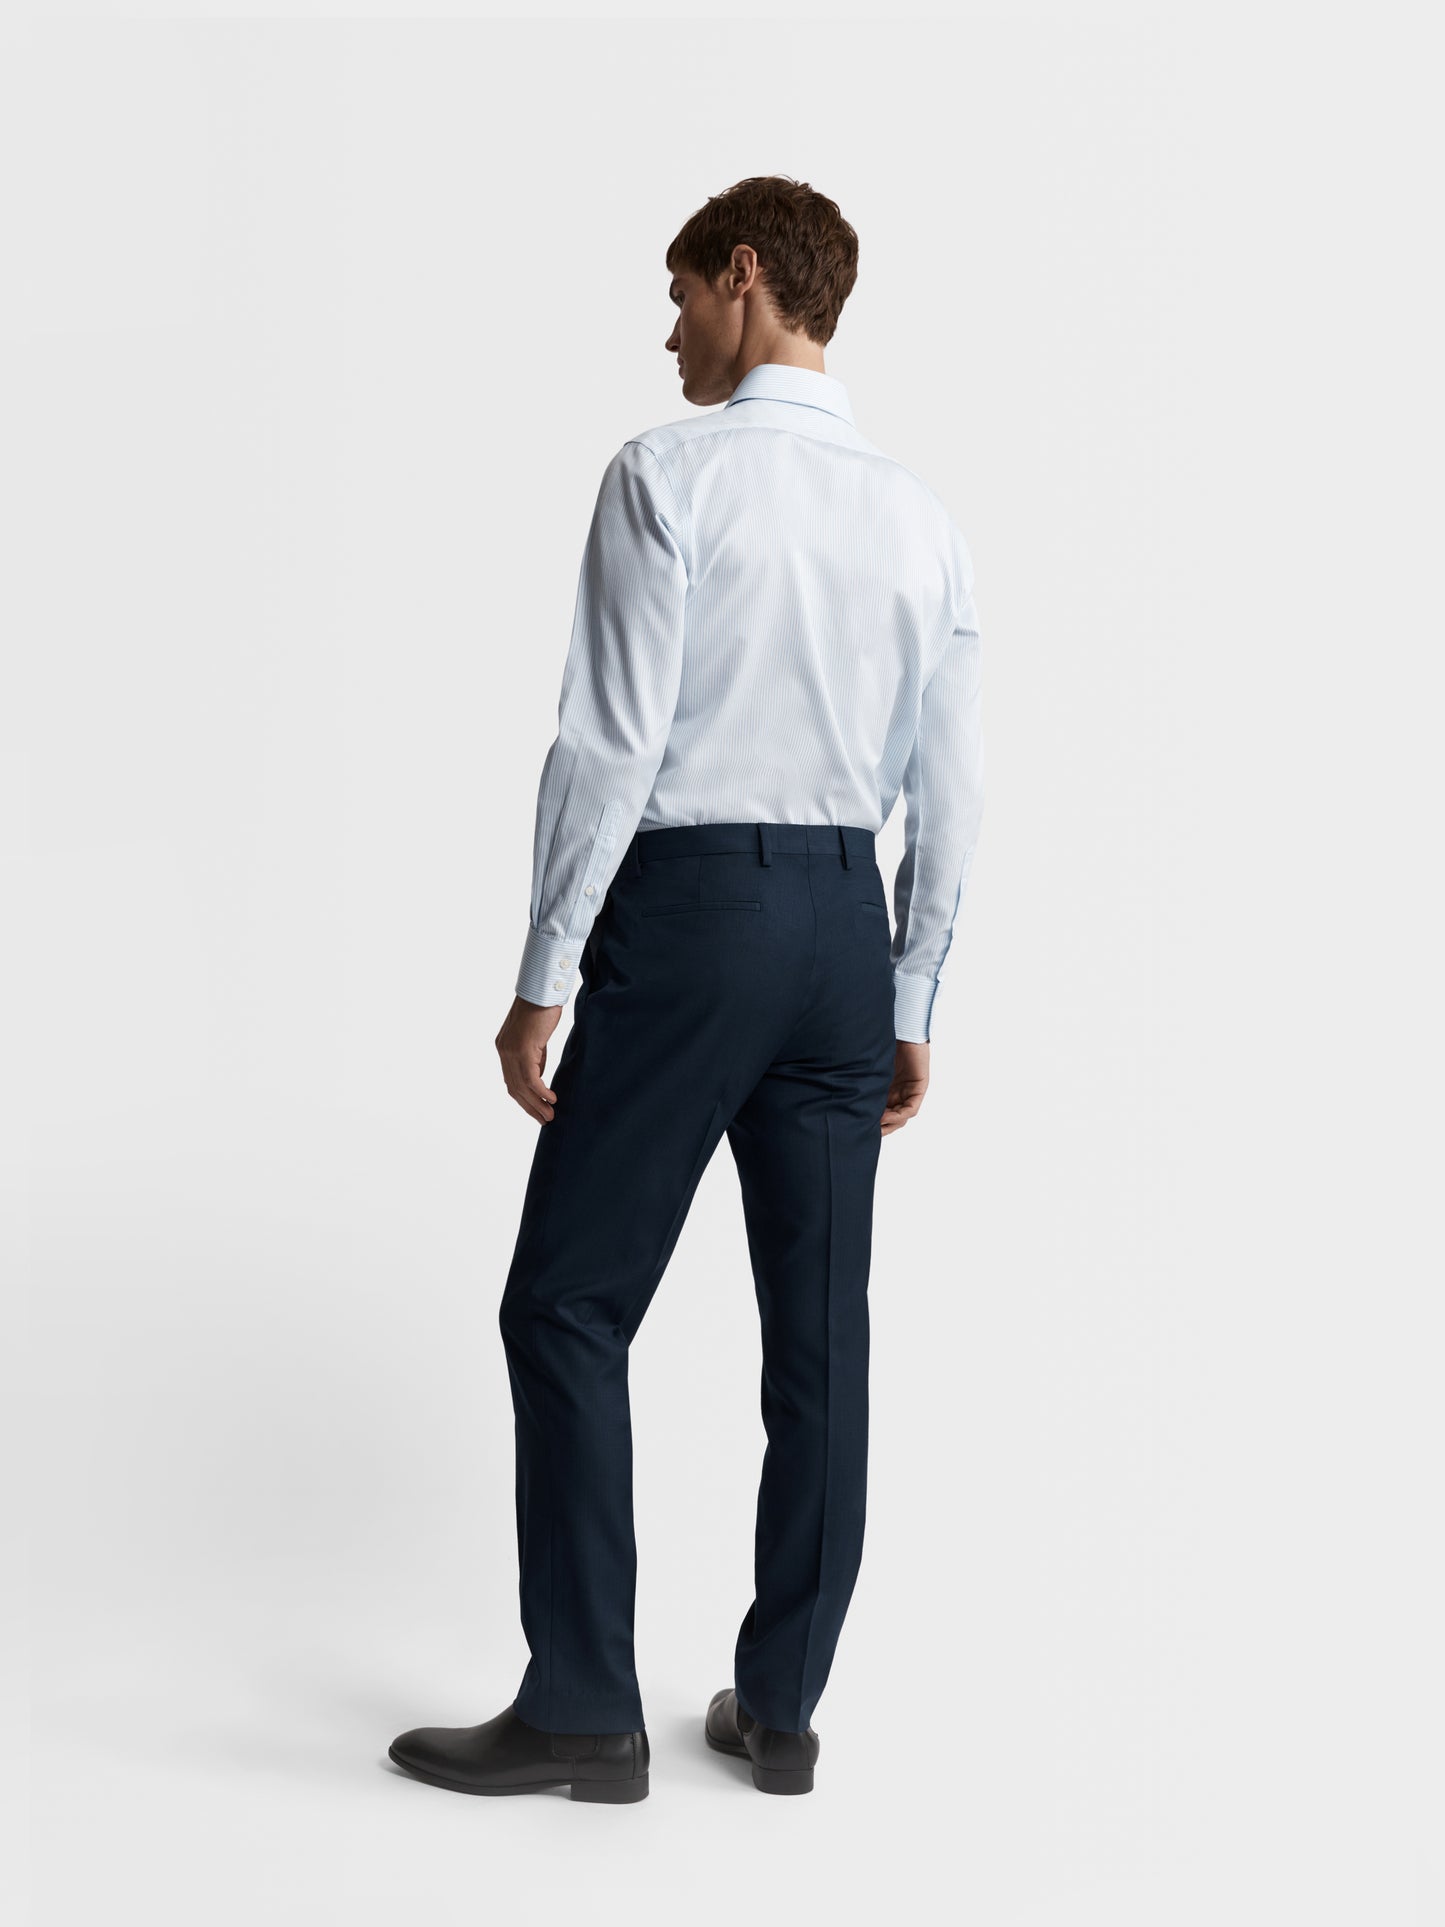 Non-Iron Light Blue Bengal Stripe Twill Slim Fit Single Cuff Classic Collar Shirt